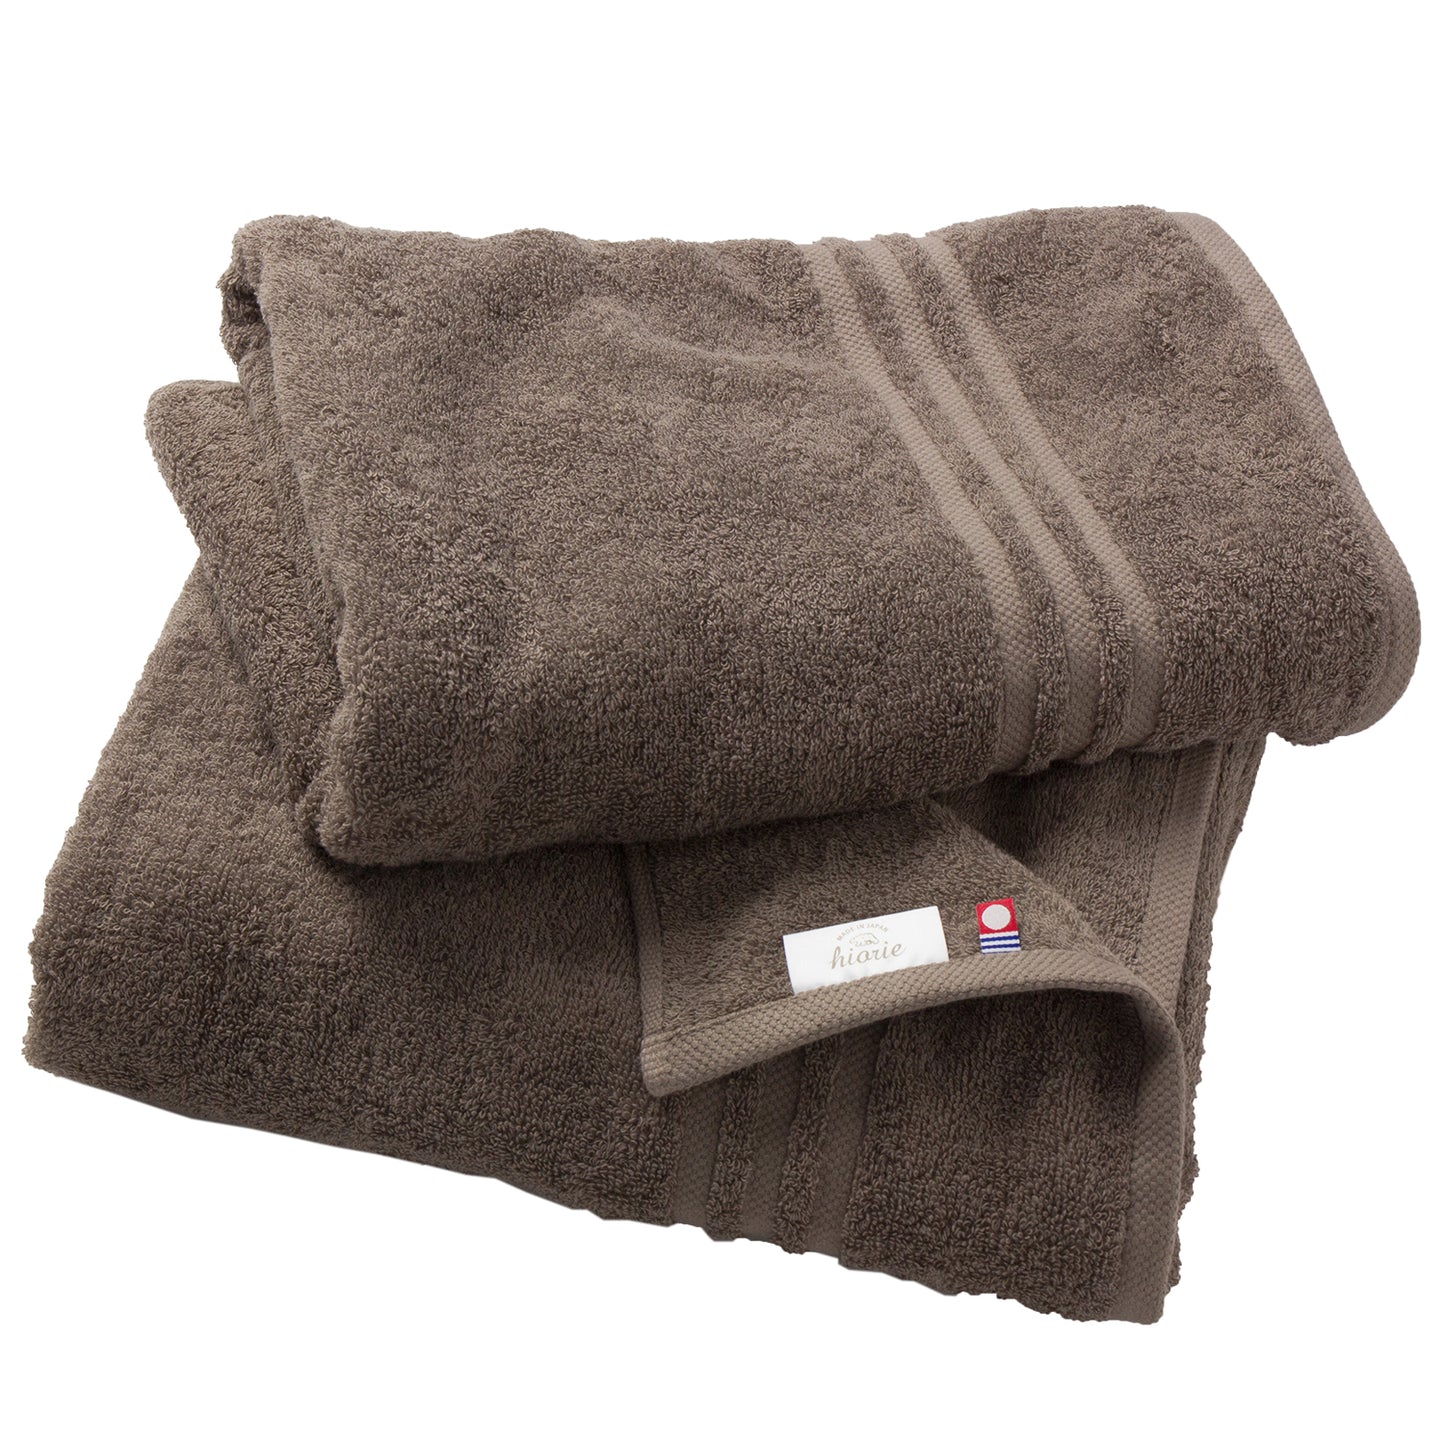 Hiorie Imabari Towel Soft Hotel's Fluffy Bath Towel 2 Sheets 100% cotton Japan